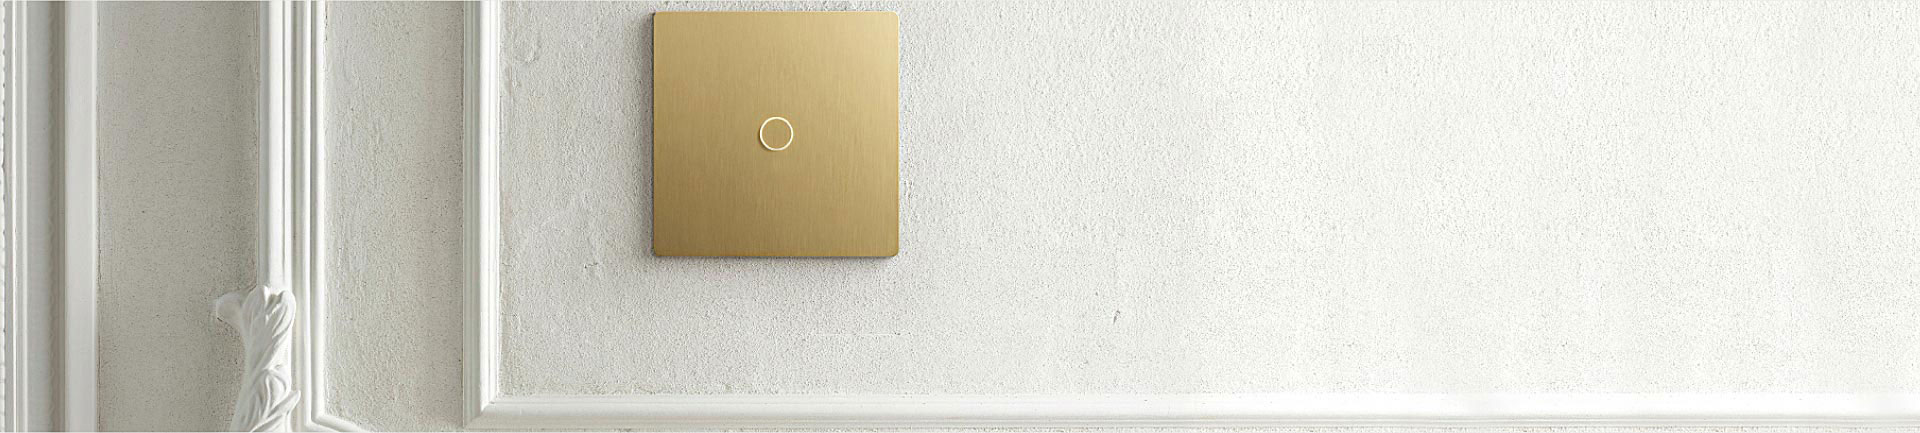 Wall-mounted single column, 1-button Alisse keypad